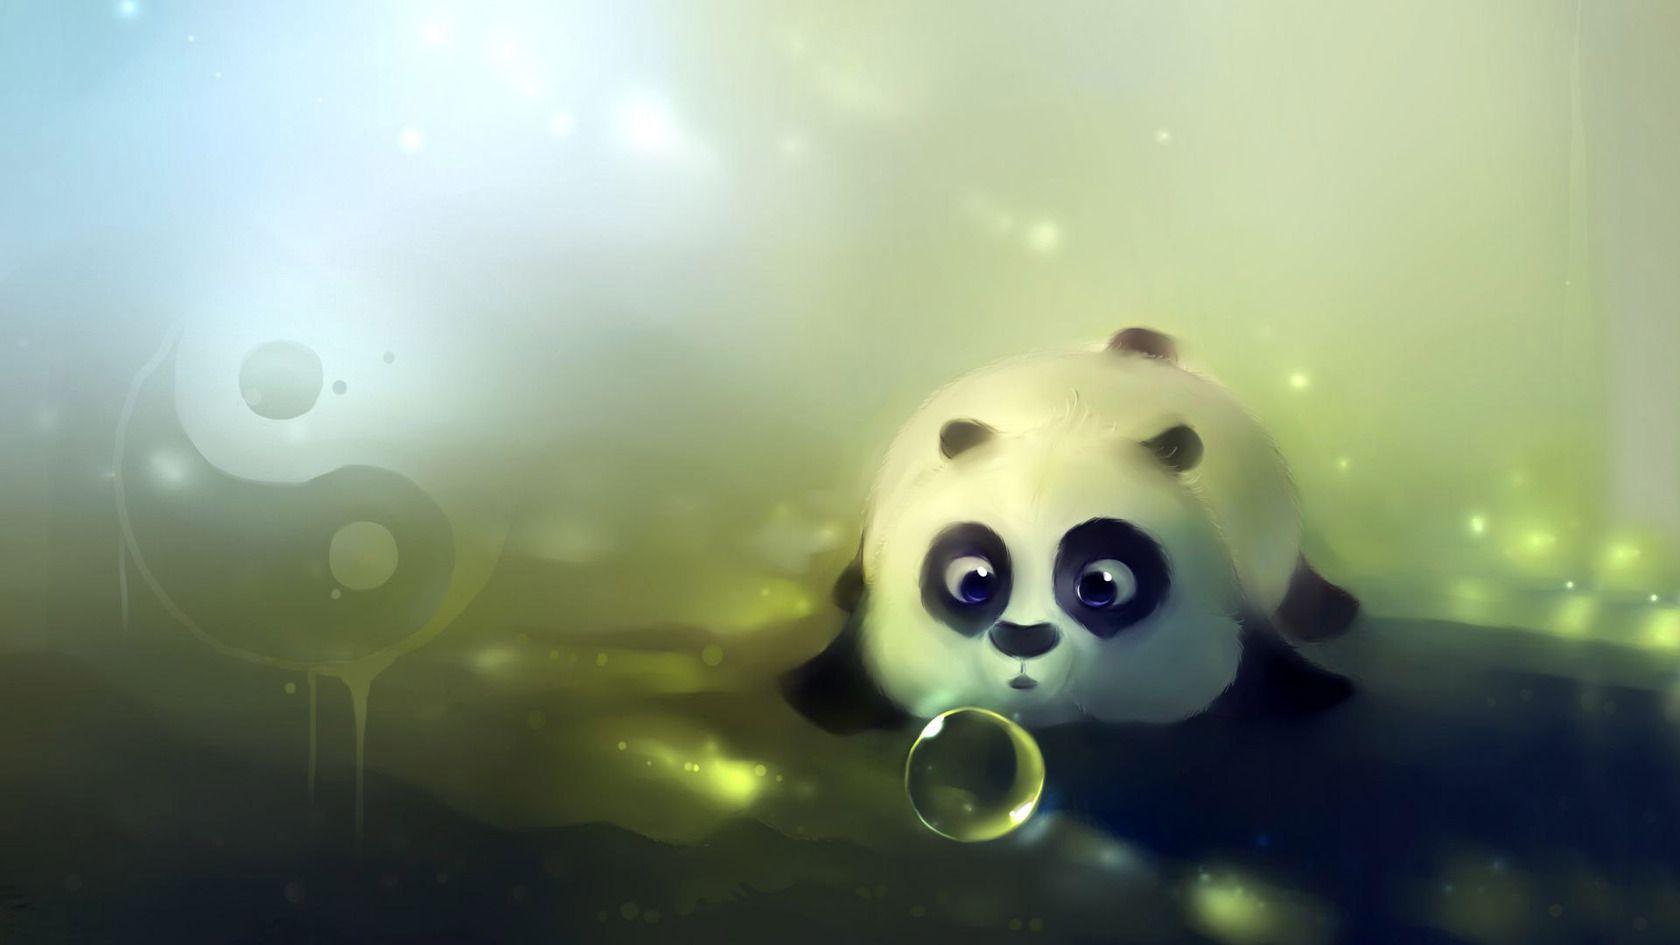 Cute Panda Playing With Bubbles Wallpaper iWallHD